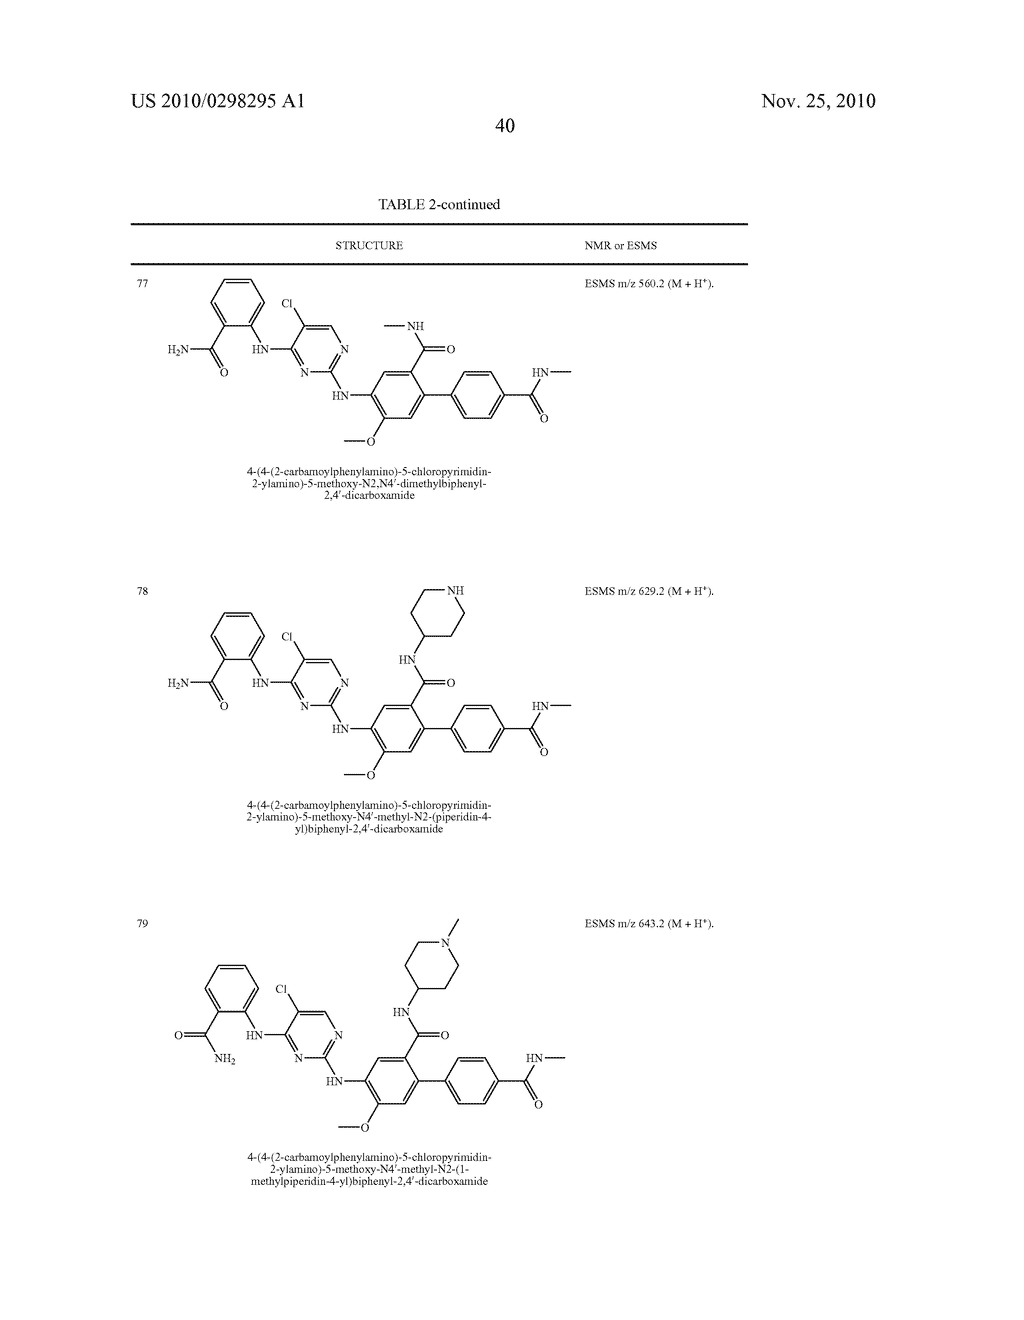 2-BIPHENYLAMINO-4-AMINOPYRIMIDINE DERIVATIVES AS KINASE INHIBITORS - diagram, schematic, and image 41